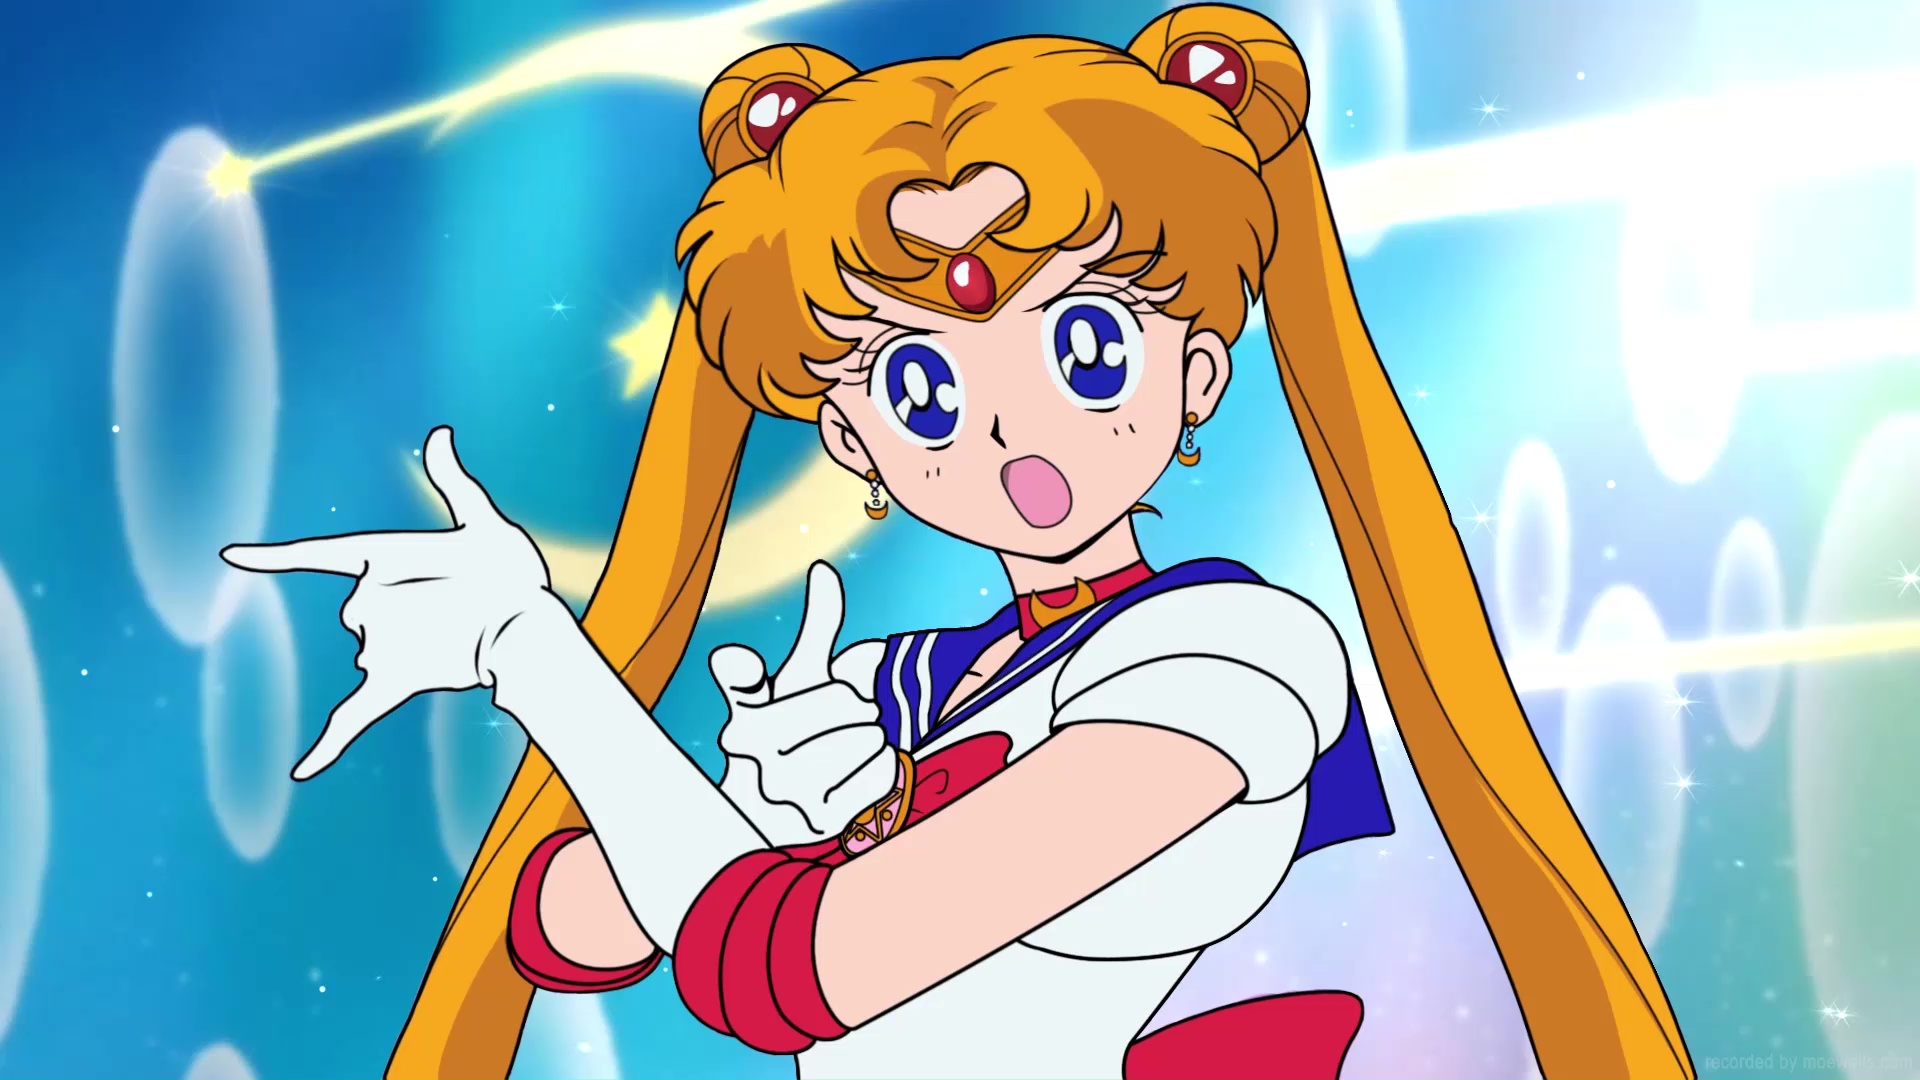 Sailor Moon 4K Wallpaper  3840 x 2160 px  4K